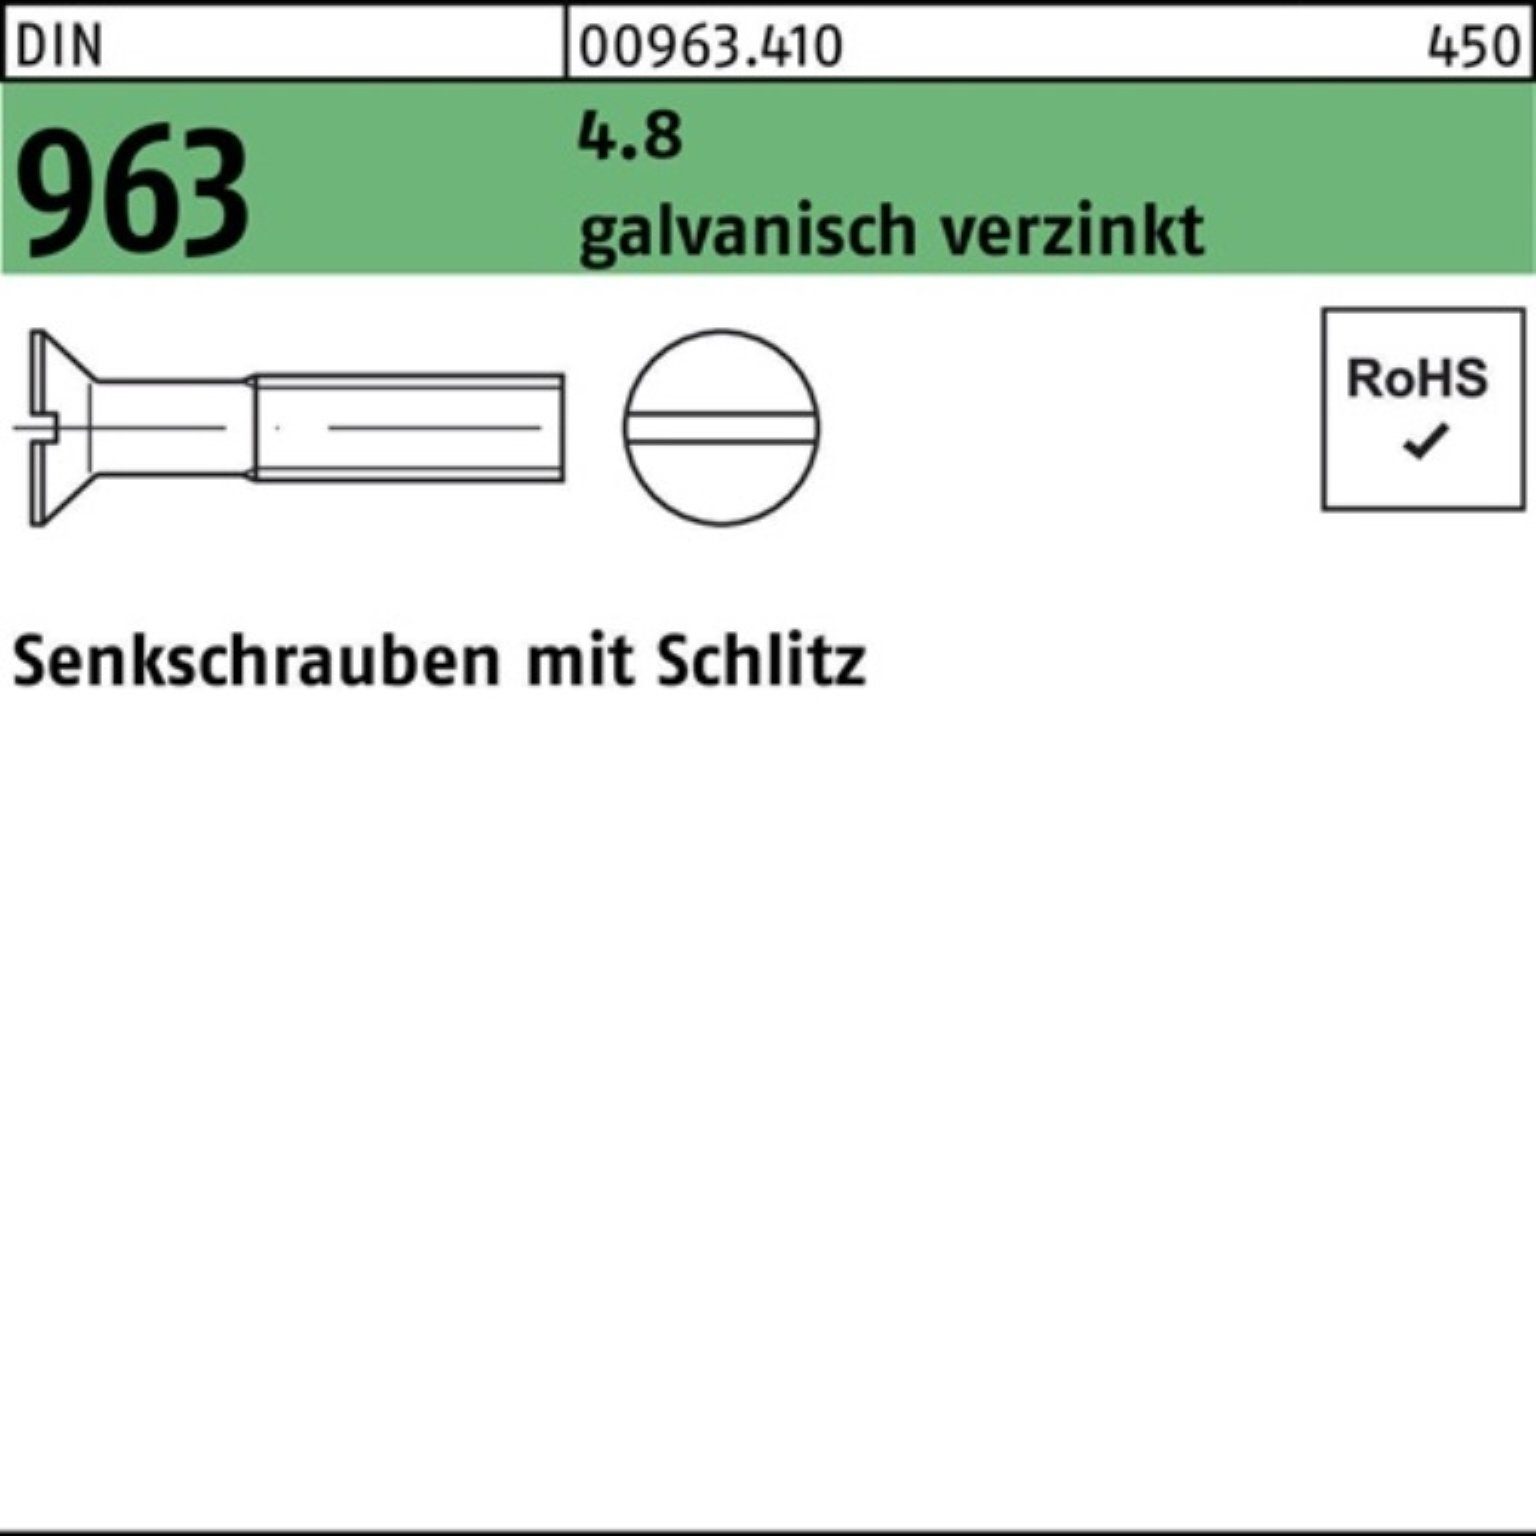 Reyher Senkschraube 100er Pack Senkschraube DIN 963 Schlitz M8x 90 4.8 galv.verz. 100 Stü